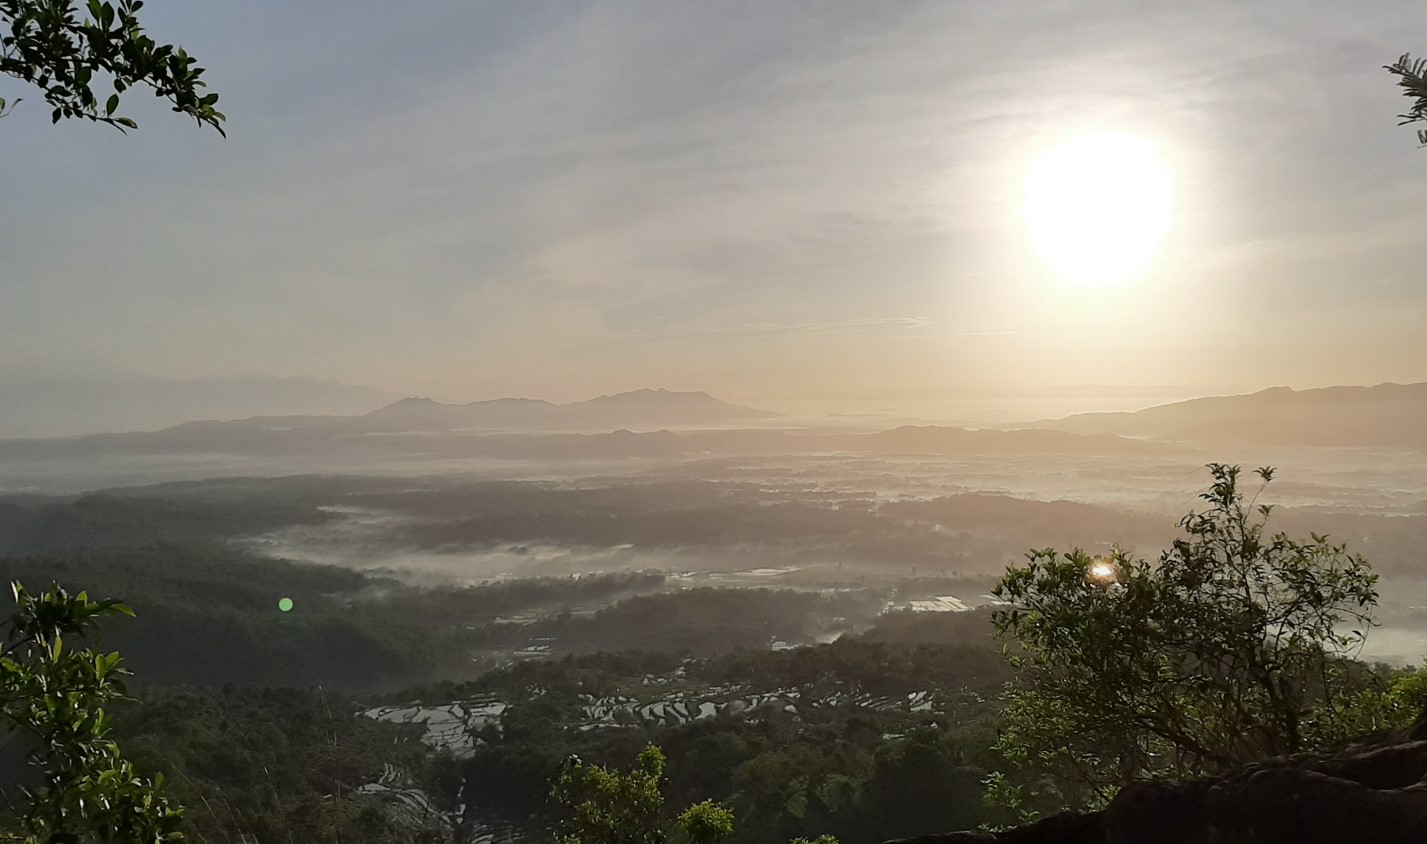 Pesona Keindahan Wisata Gunung Gambar di Ngawen Gunung Kidul Yogyakarta